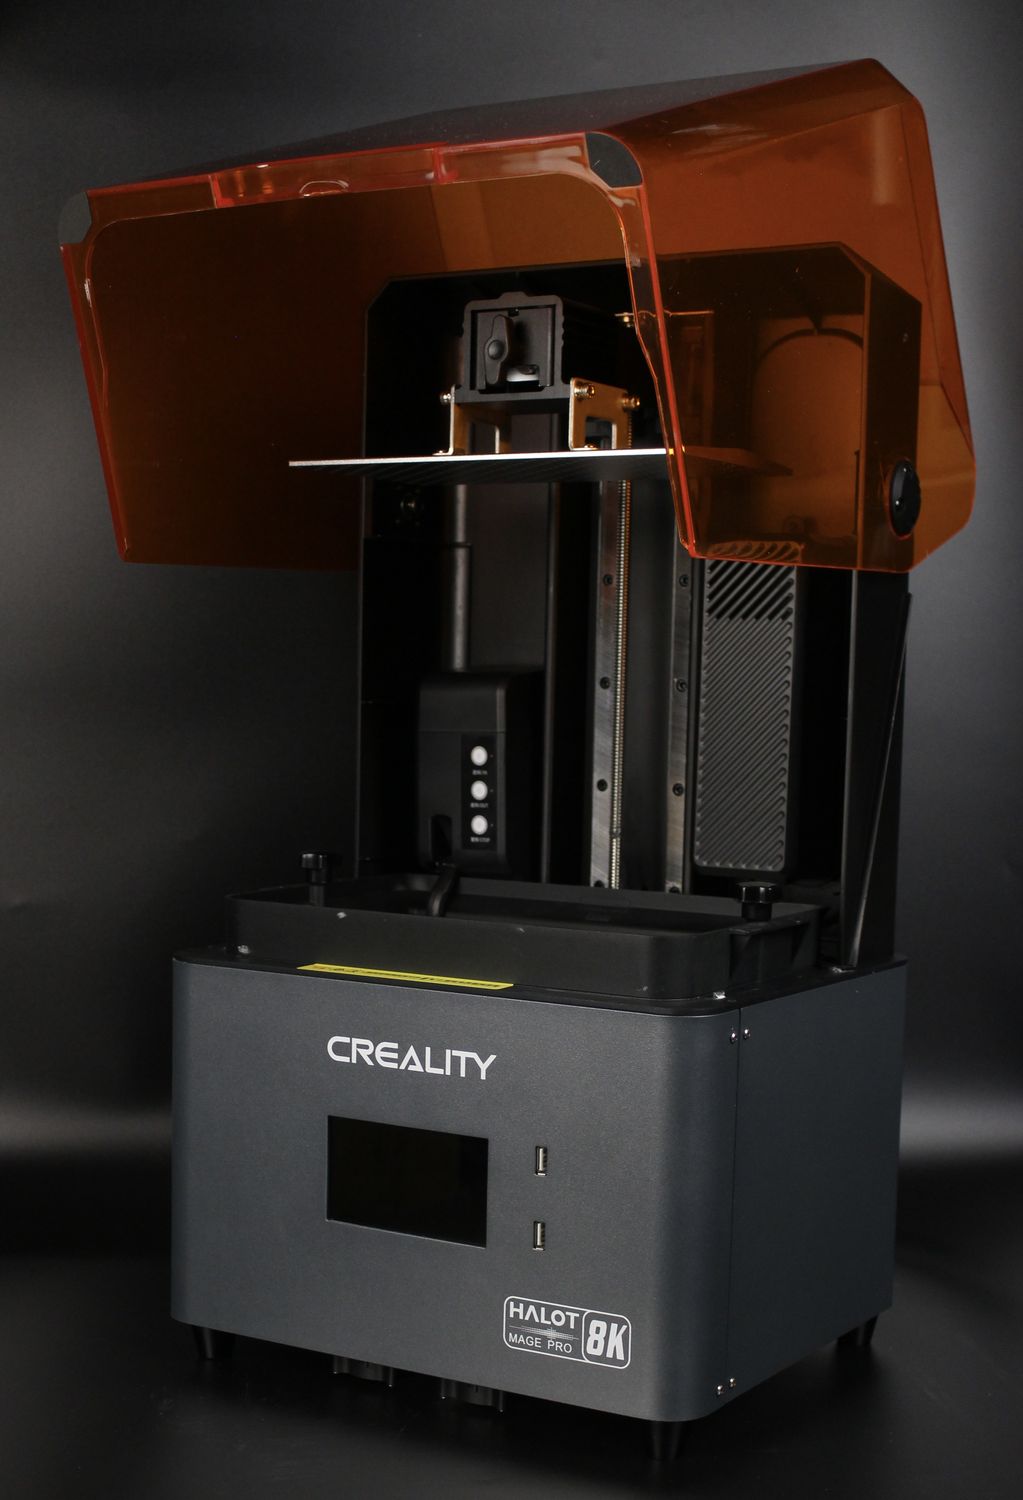 Creality Halot Mage Pro Review Design6 | Creality Halot Mage Pro Review: Great Prints, Bad Software